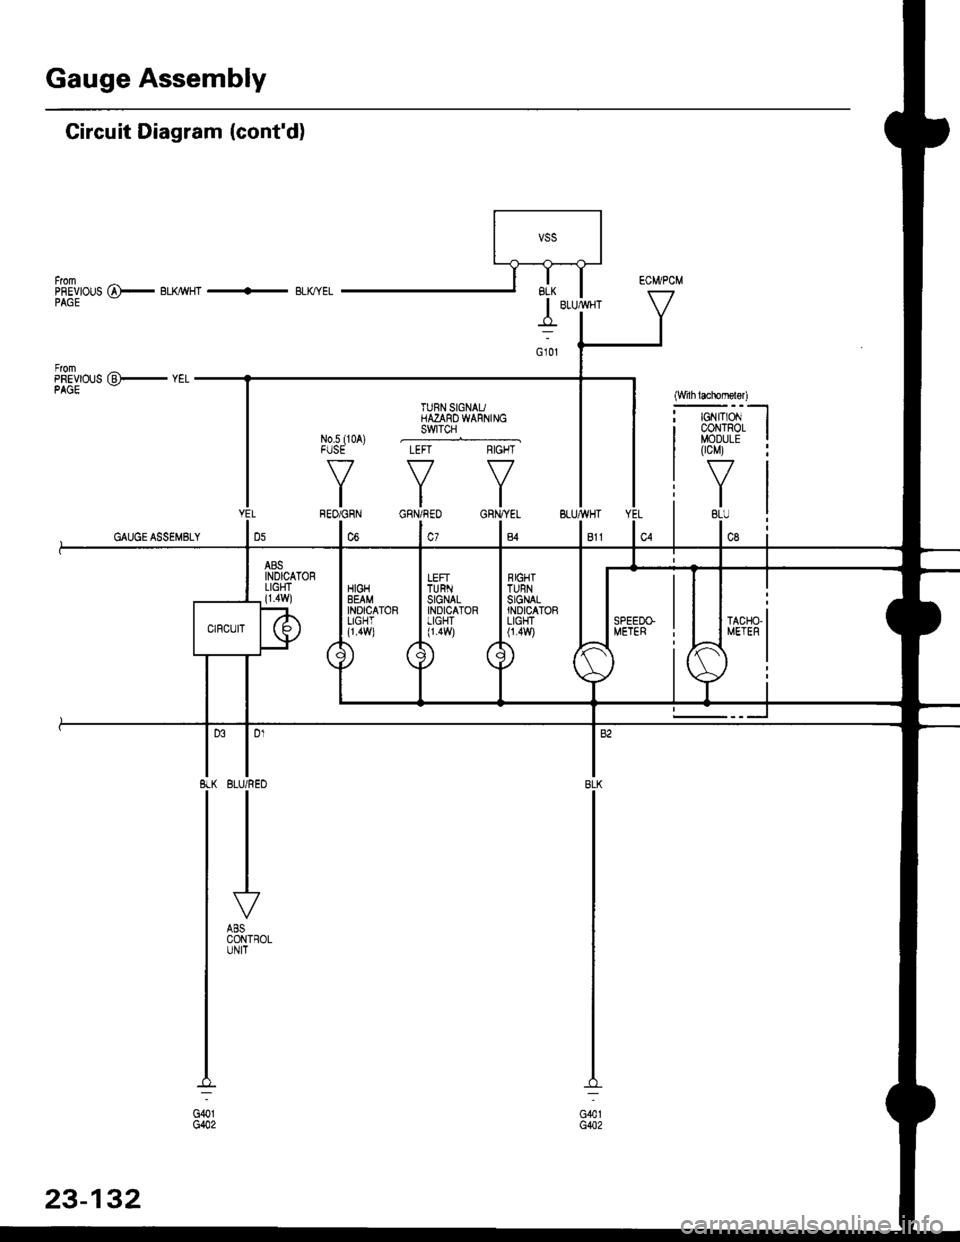 HONDA CIVIC 1997 6.G User Guide Gauge Assembly
(Wnh lachomolgr)
I cNfldt--]I CONTRoL II MODULE
I 0cM) :
tvl
i.ll
| 
-i;, 
i
TURN SIGNAUHAZAROWARNINGswtTcH
Circuit Diagram {contd)
Fh"lurous @)- BLrcwHT + BLKryEL
fiSfvrous 16r.- veL